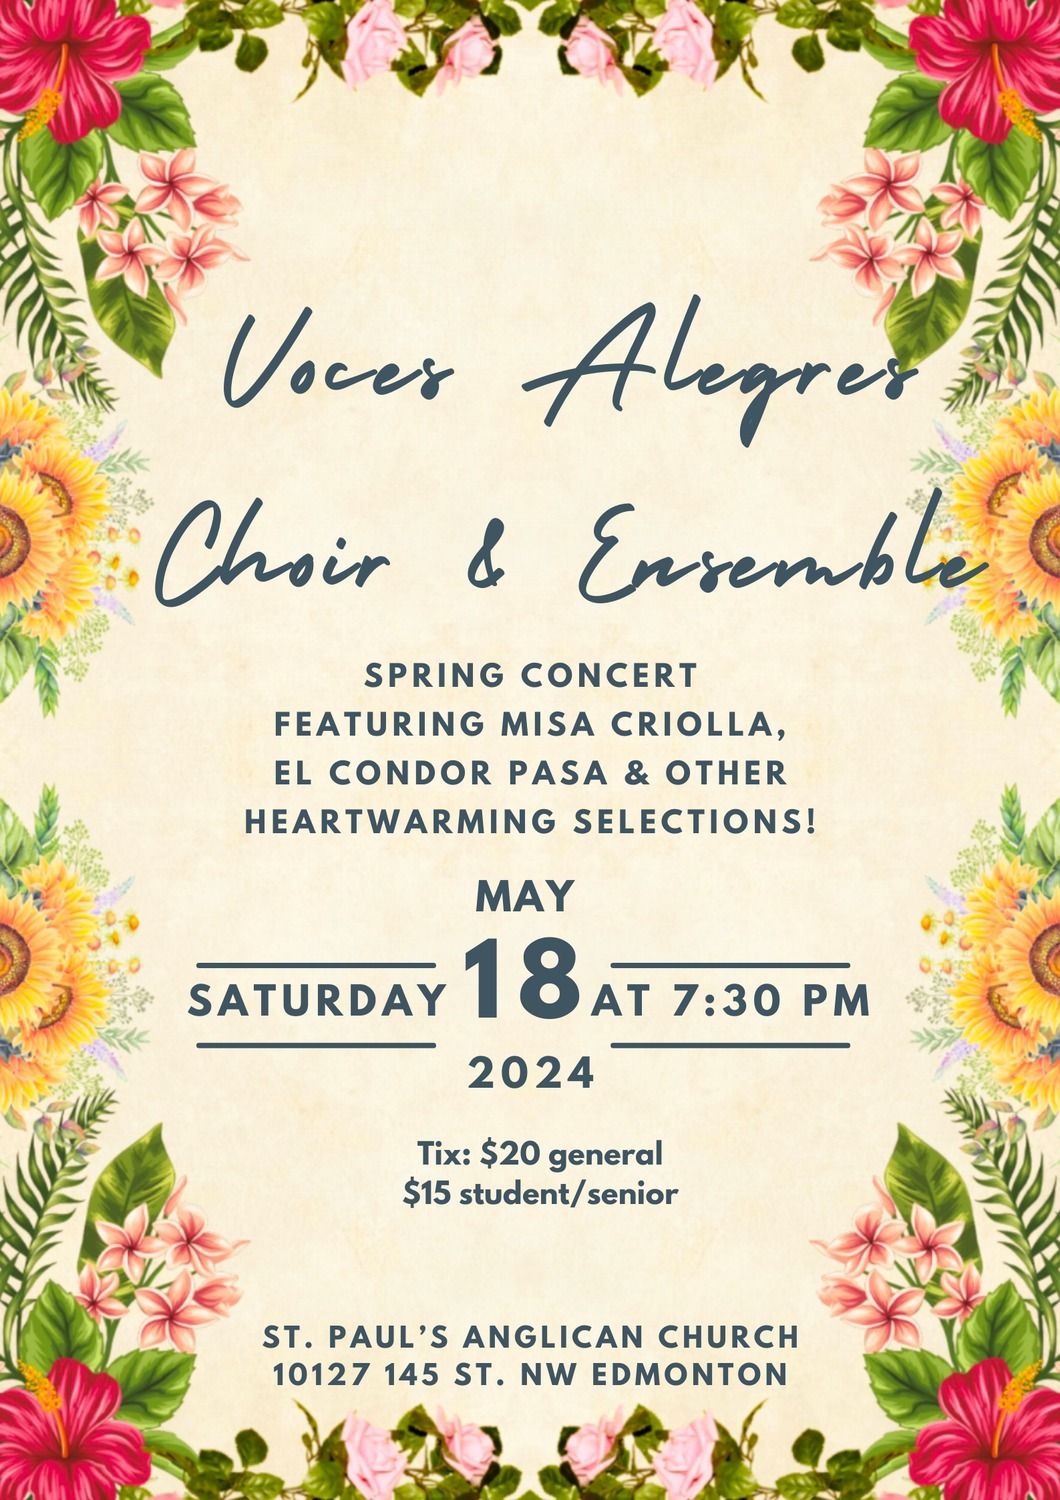 Voces Alegres Choir & Ensemble Spring Concert!